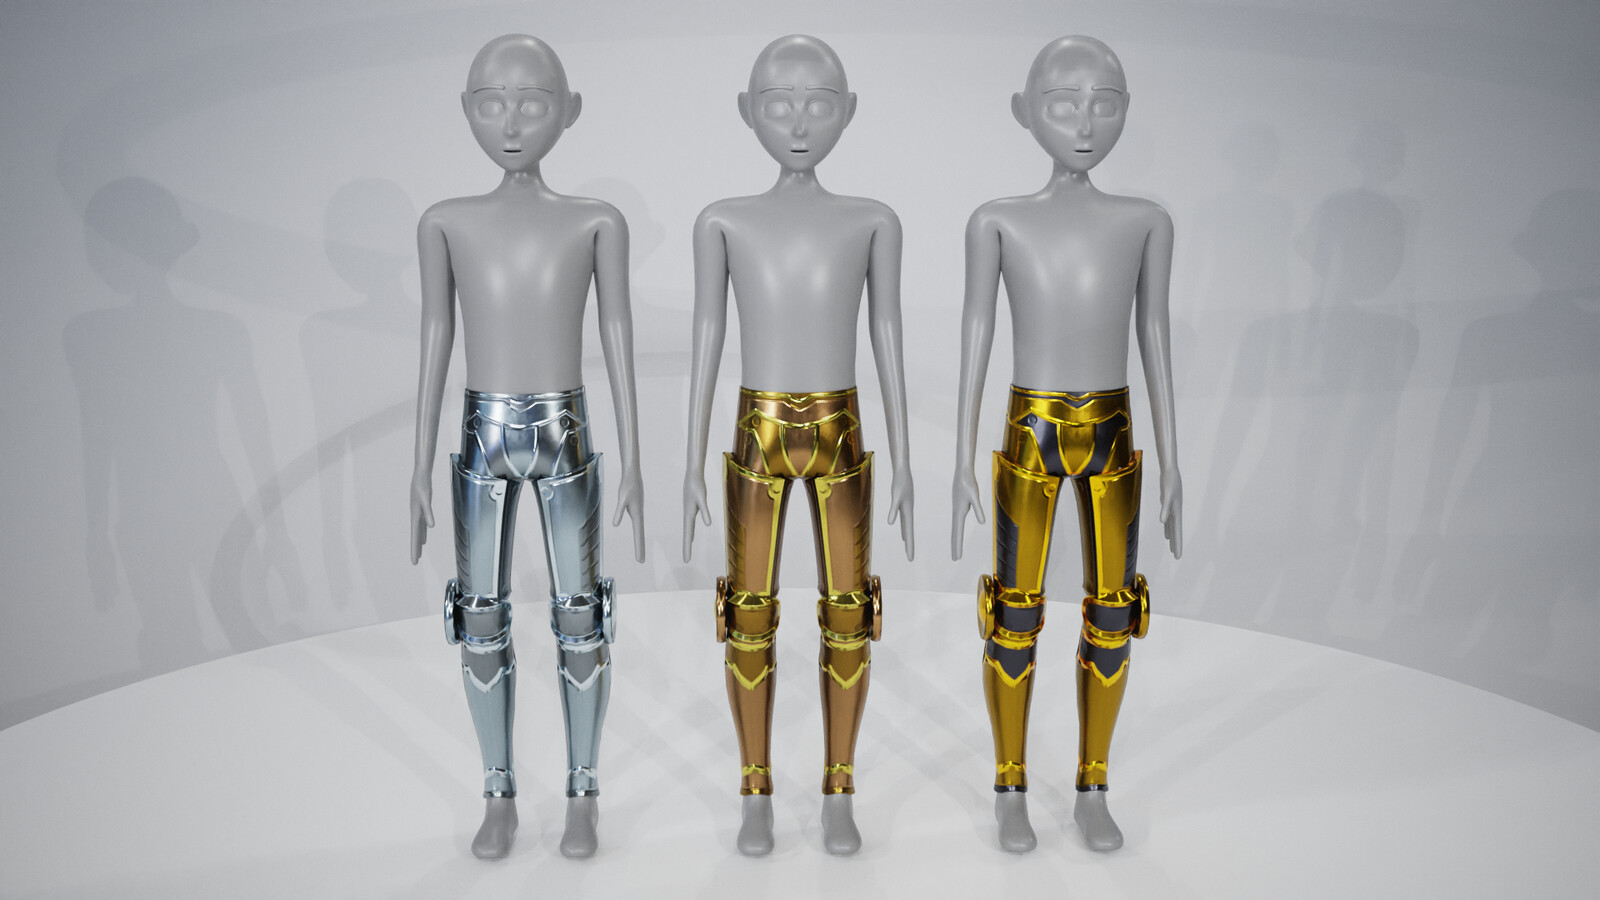 s02 - Knight Armor: Legs